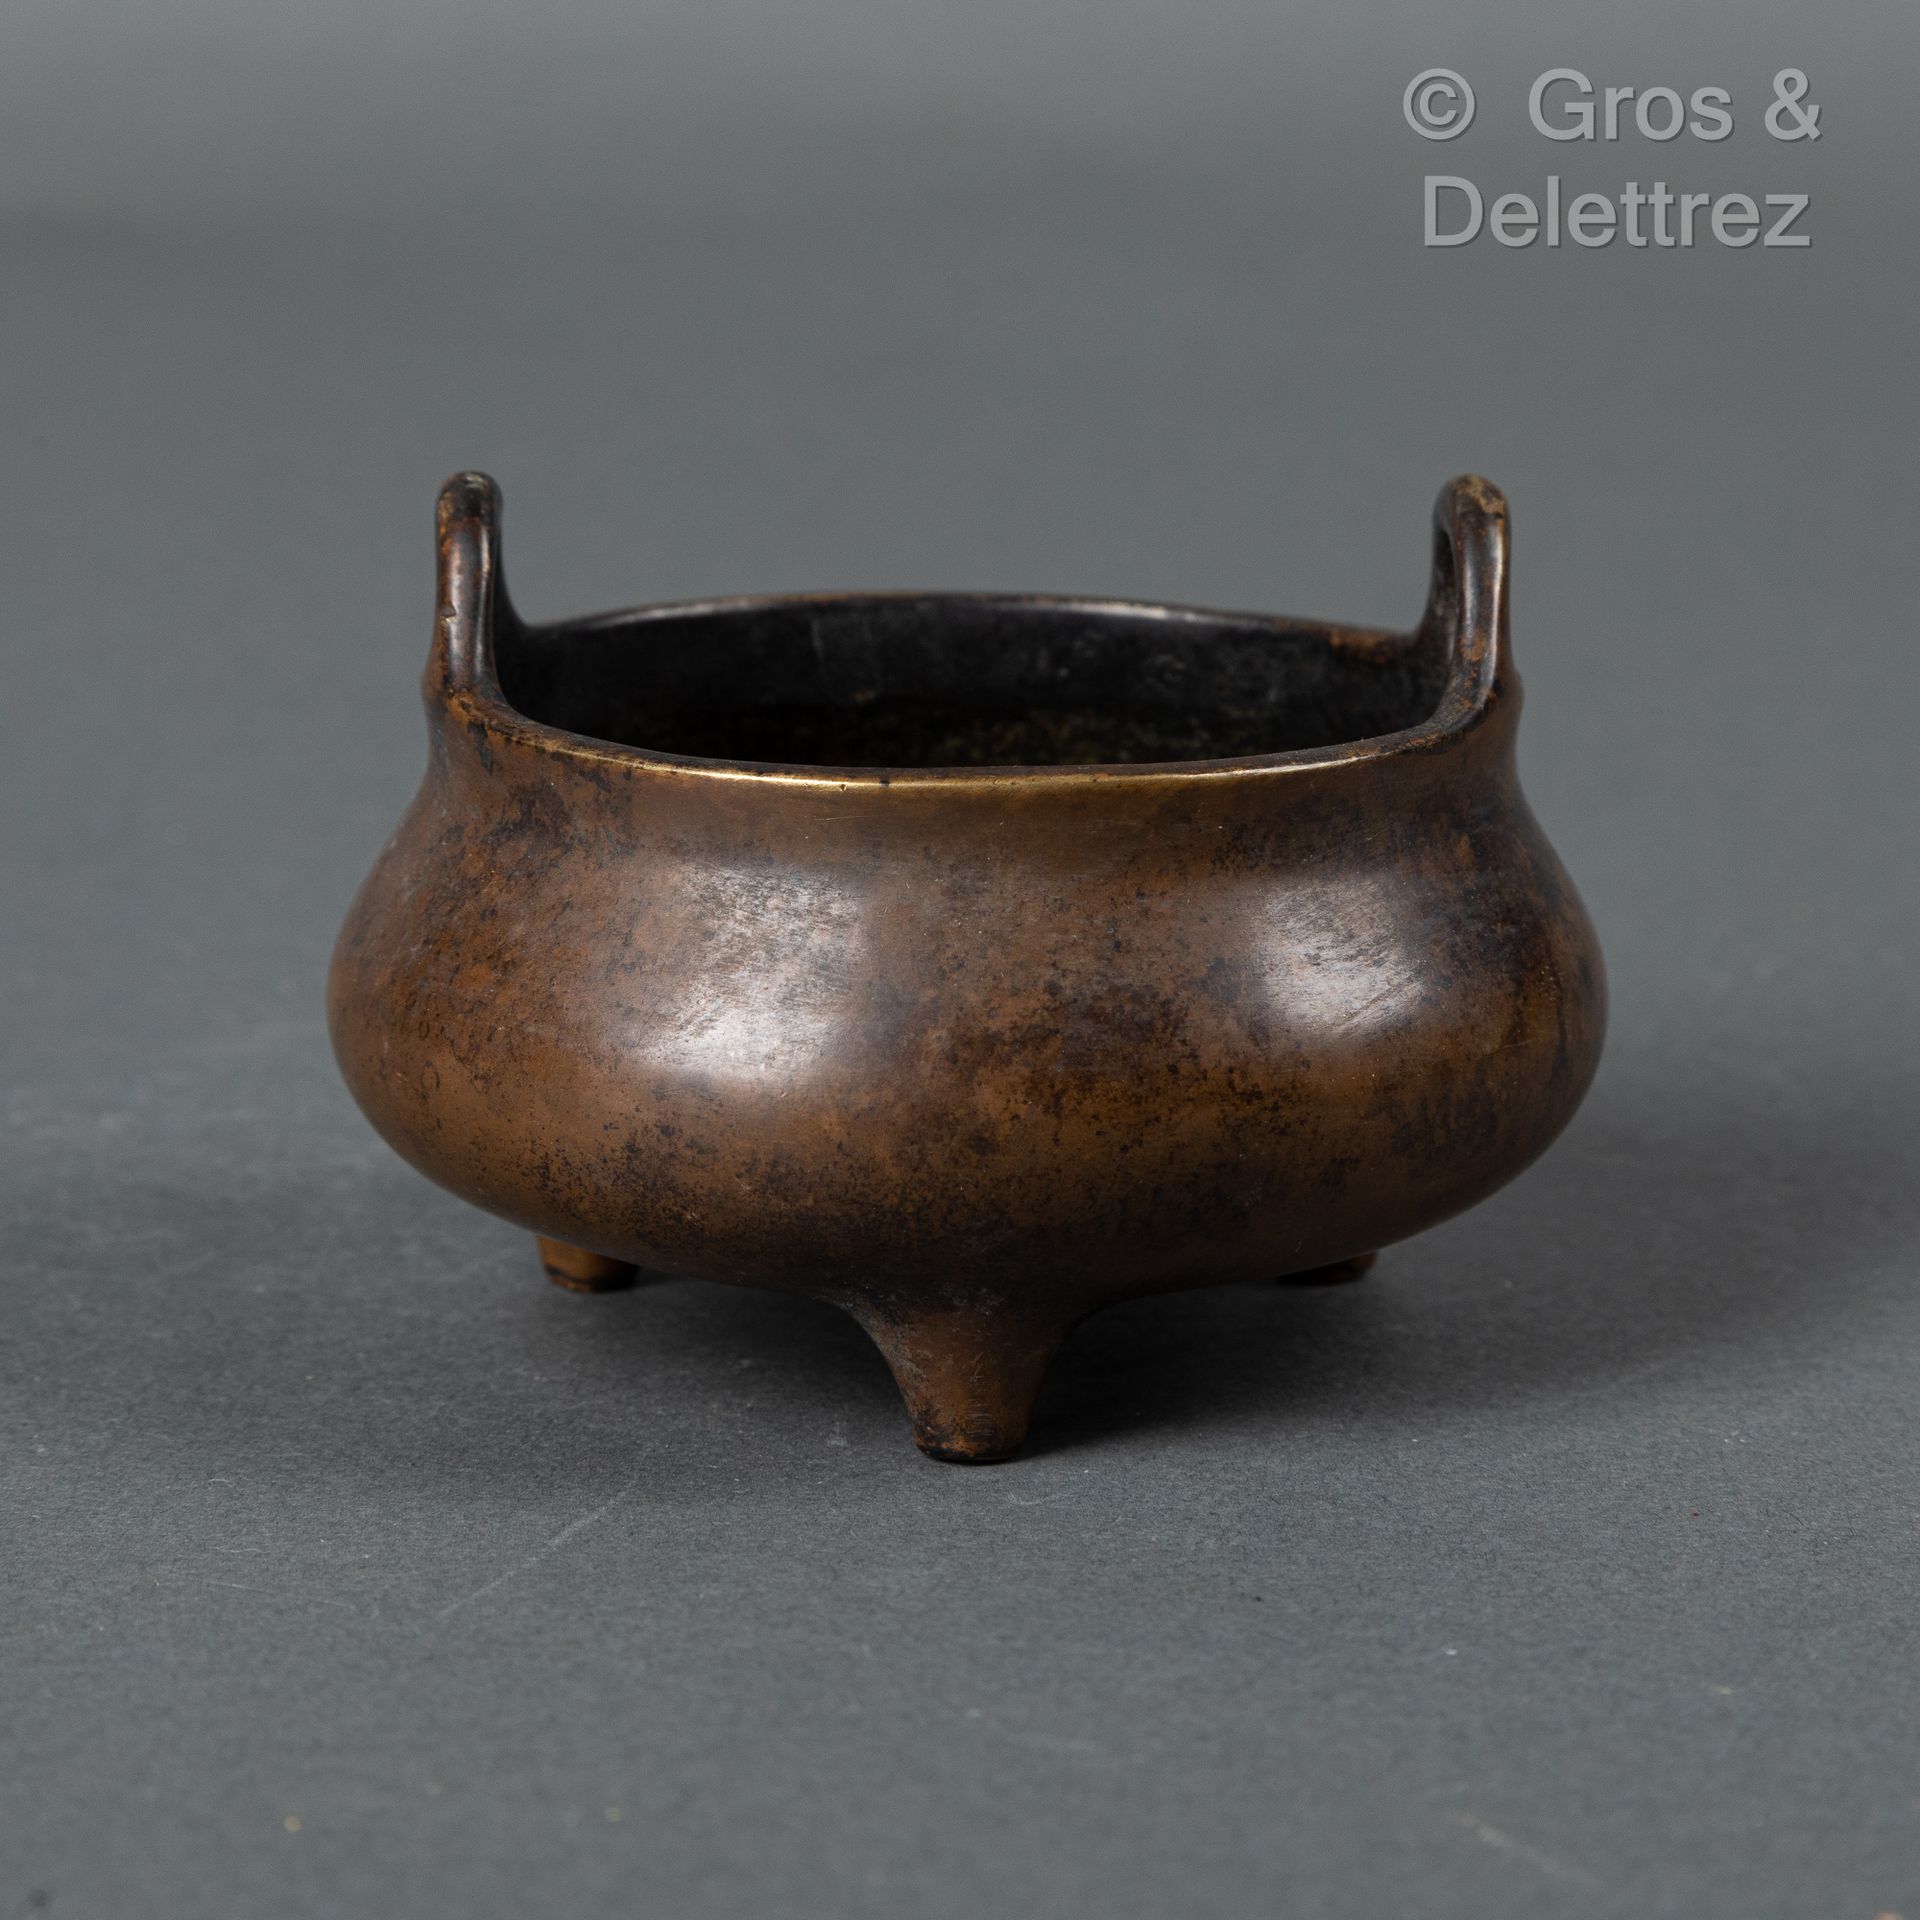 Null 中国，19世纪
小型鼎形铜香炉，有两个弯曲的把手。底部有伪装的宣德款。 
直径：10厘米